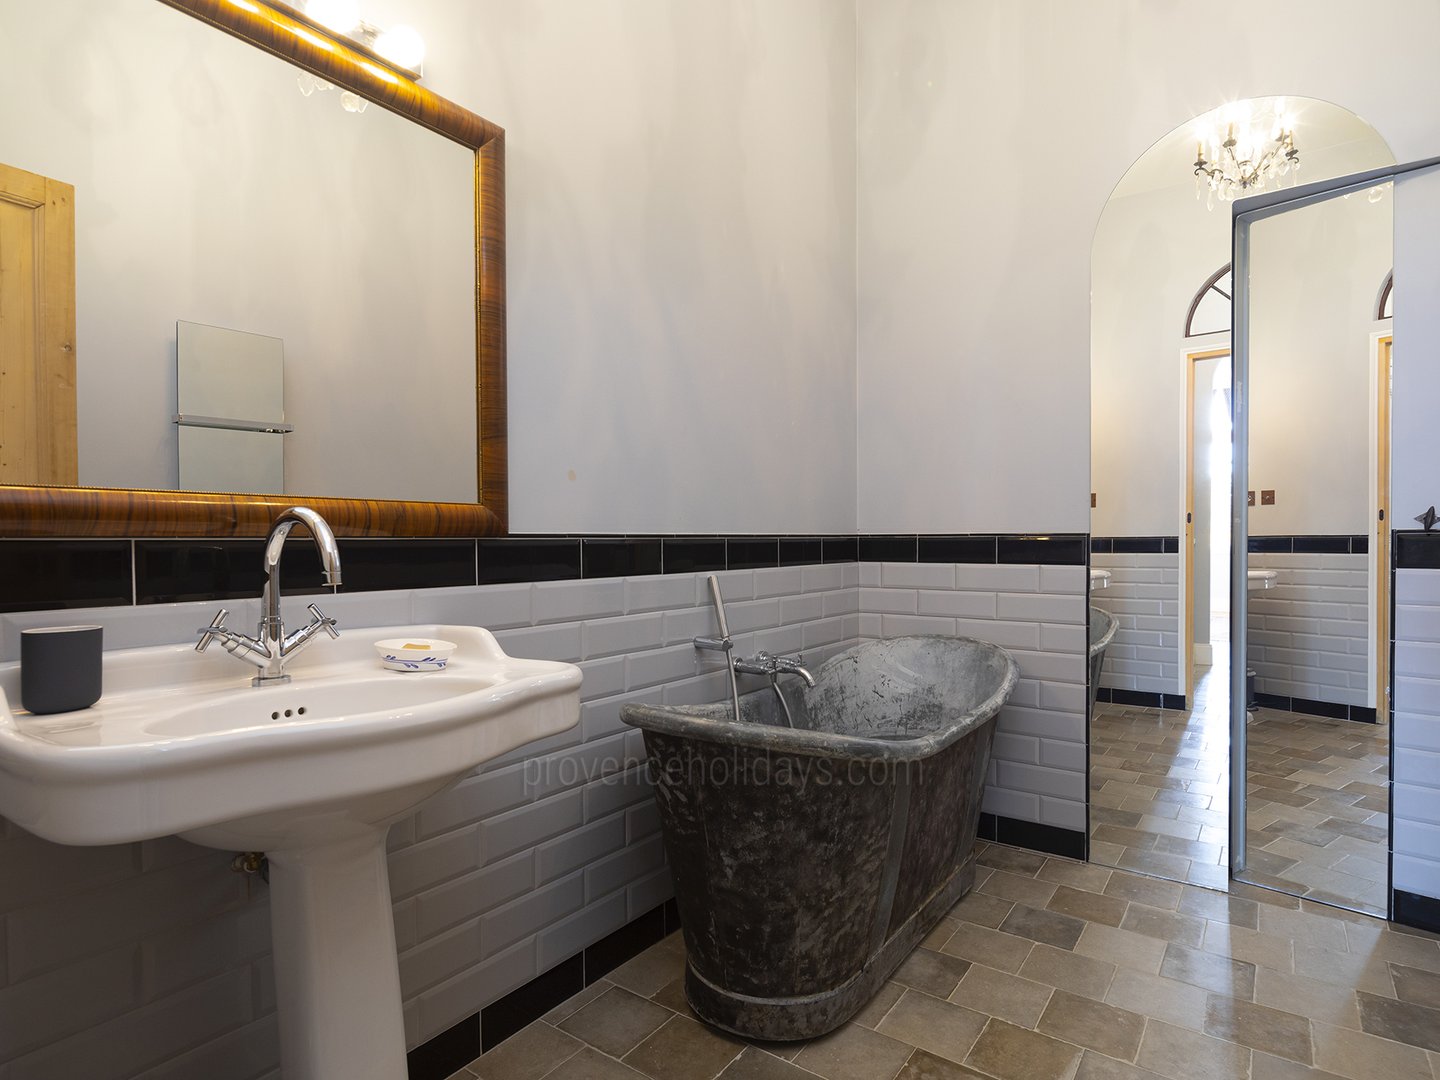 47 - Le Domaine des Vignes: Villa: Bathroom